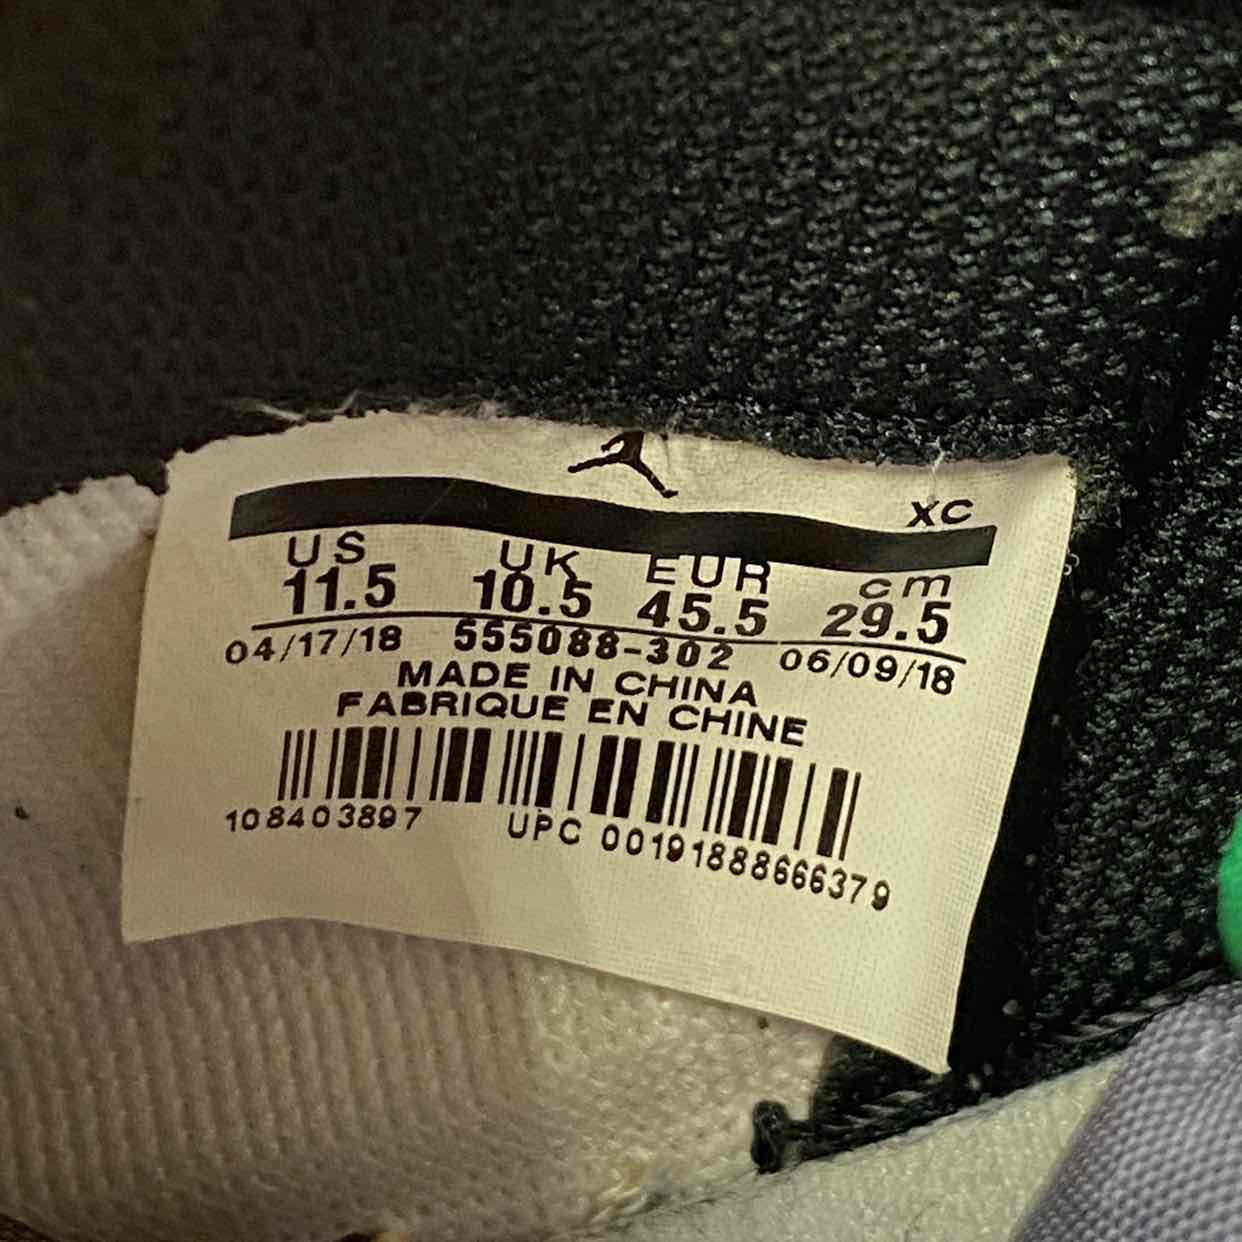 Air Jordan 1 Retro High OG &quot;PINE GREEN&quot; 2018 Used Size 11.5